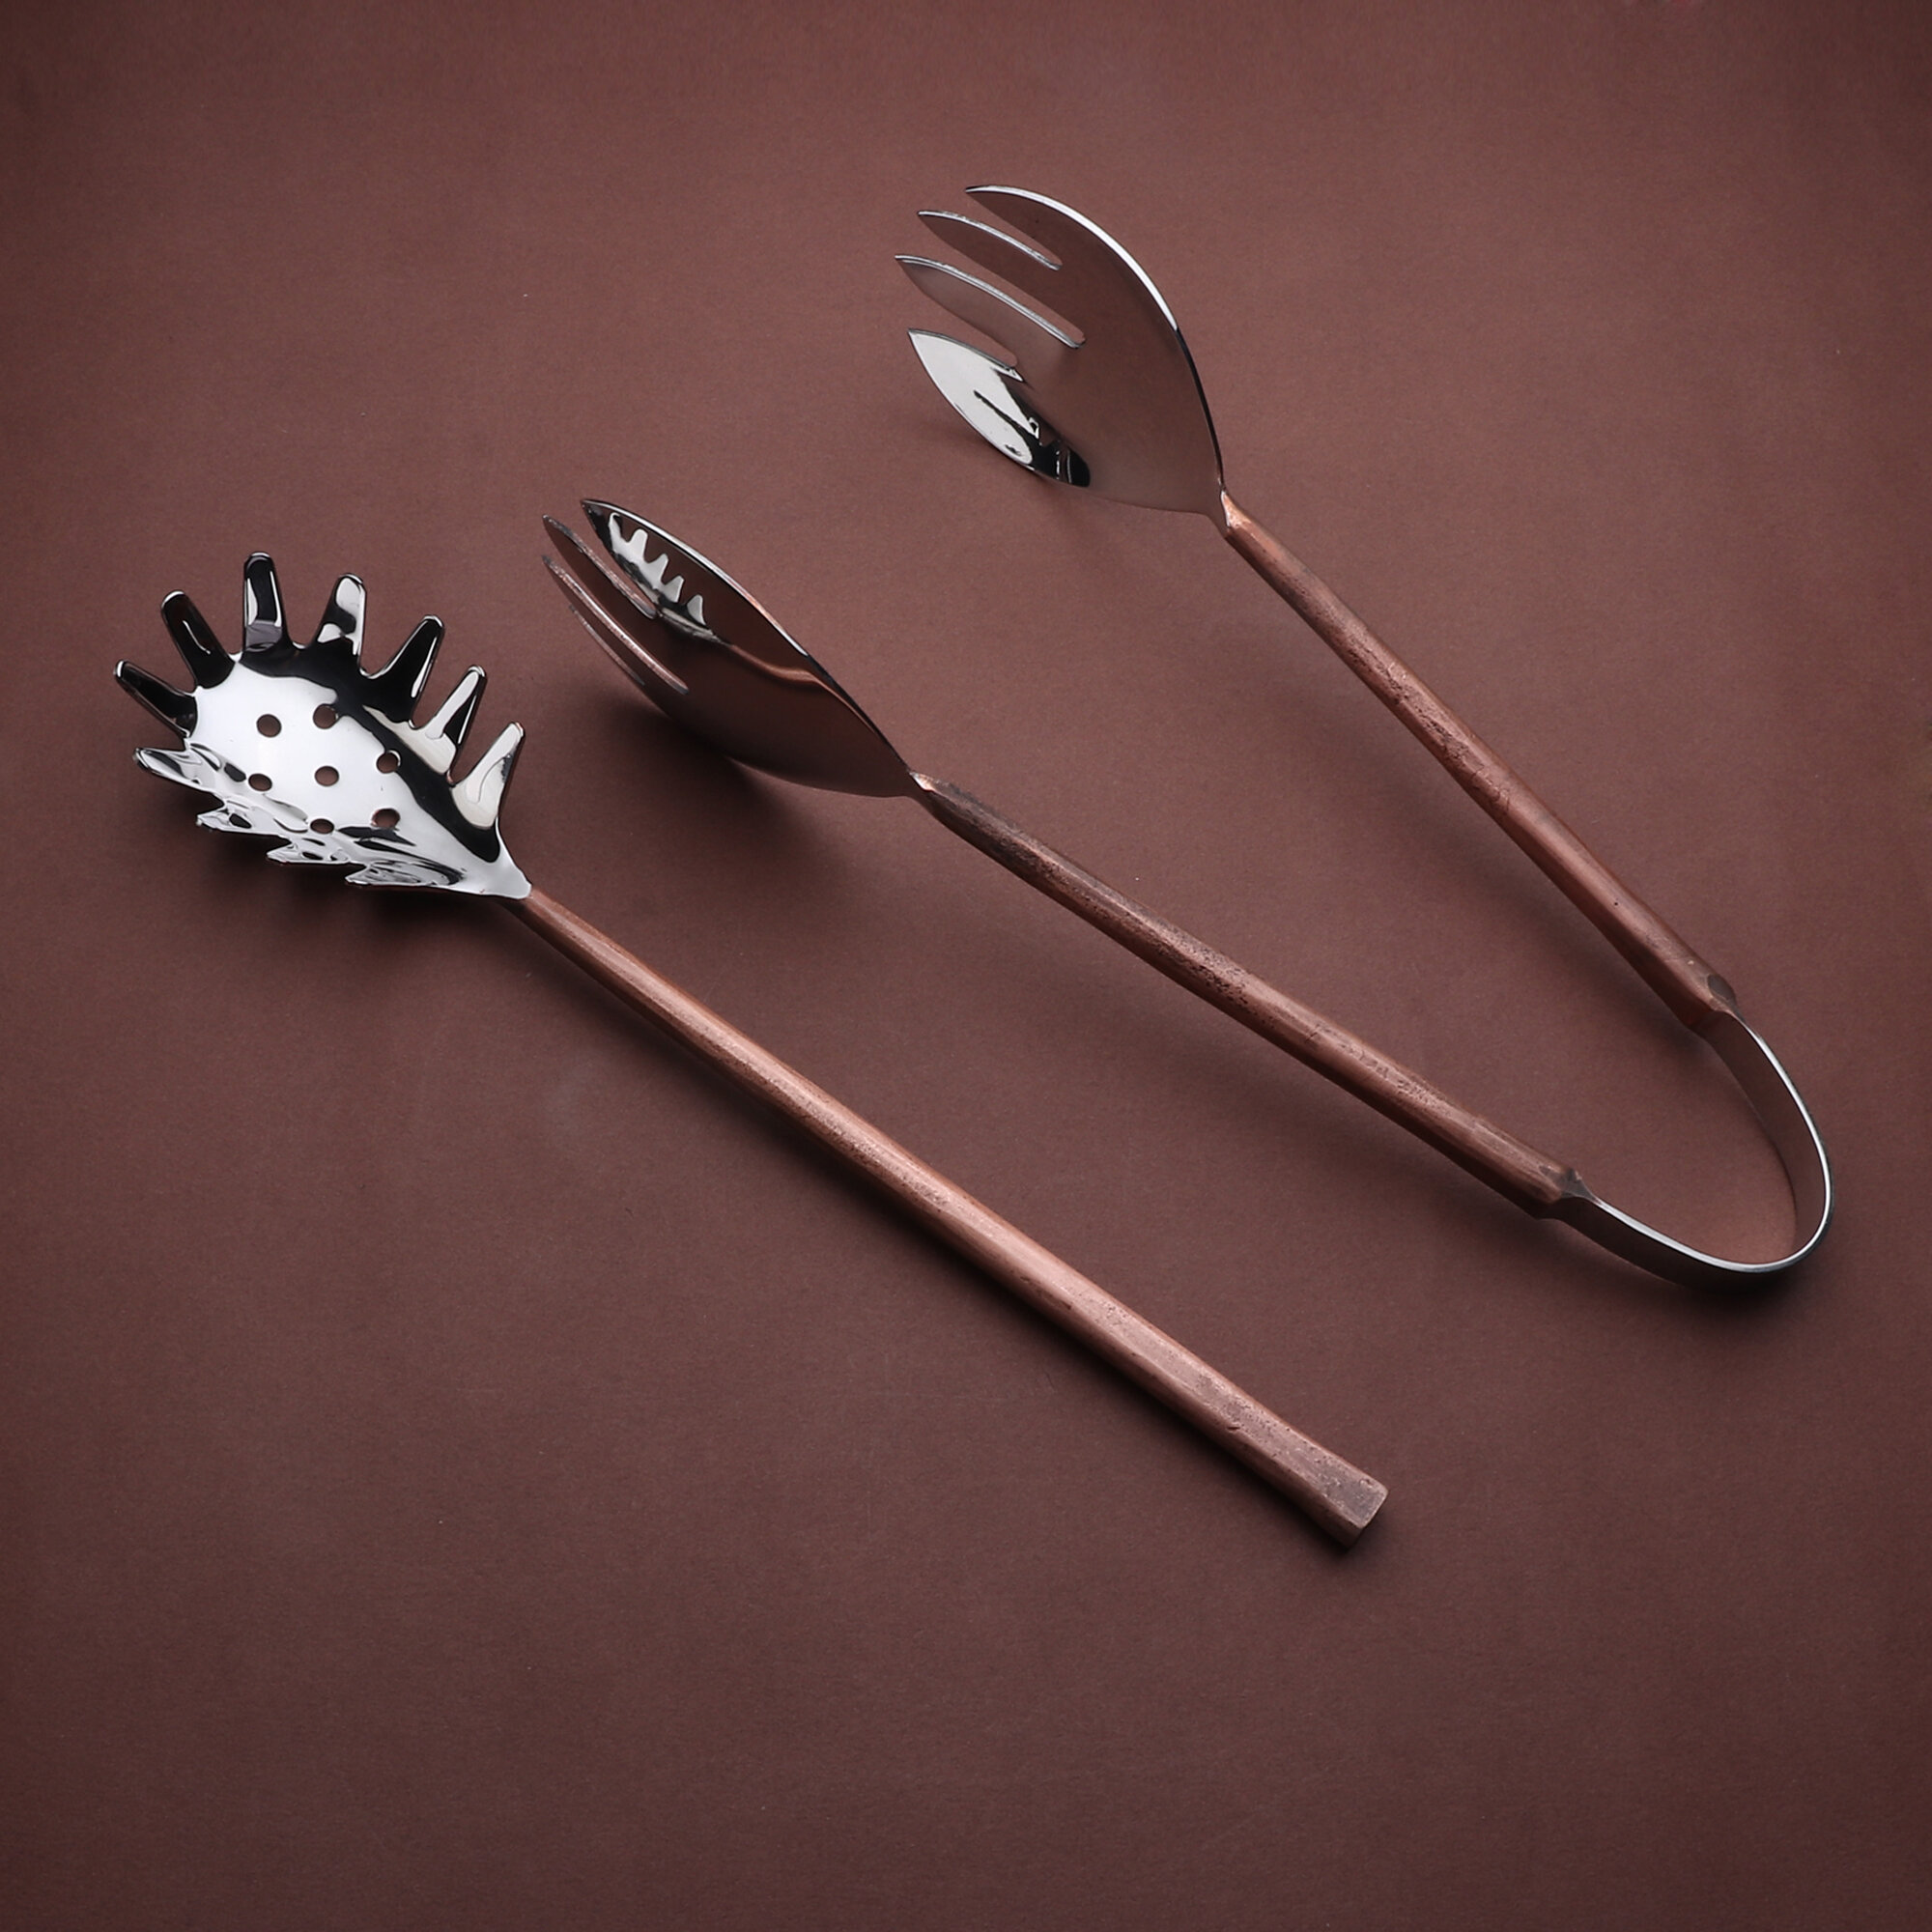 17 Stories Ahrie Design Copper Antique Butter Knife/Spreader 4 Pcs. Set